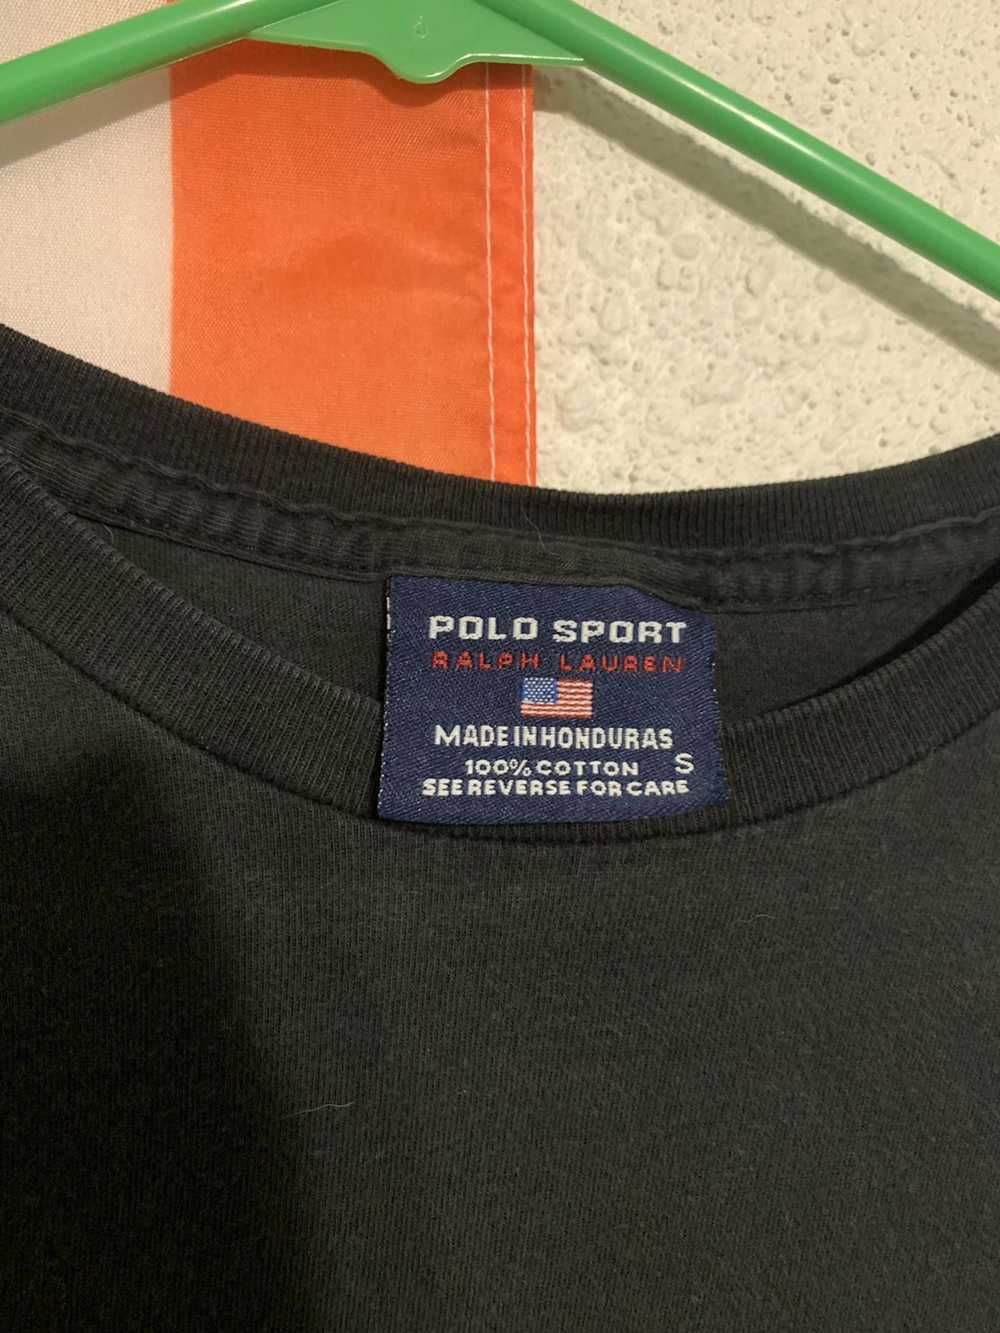 Polo Ralph Lauren polo sport tee - image 3